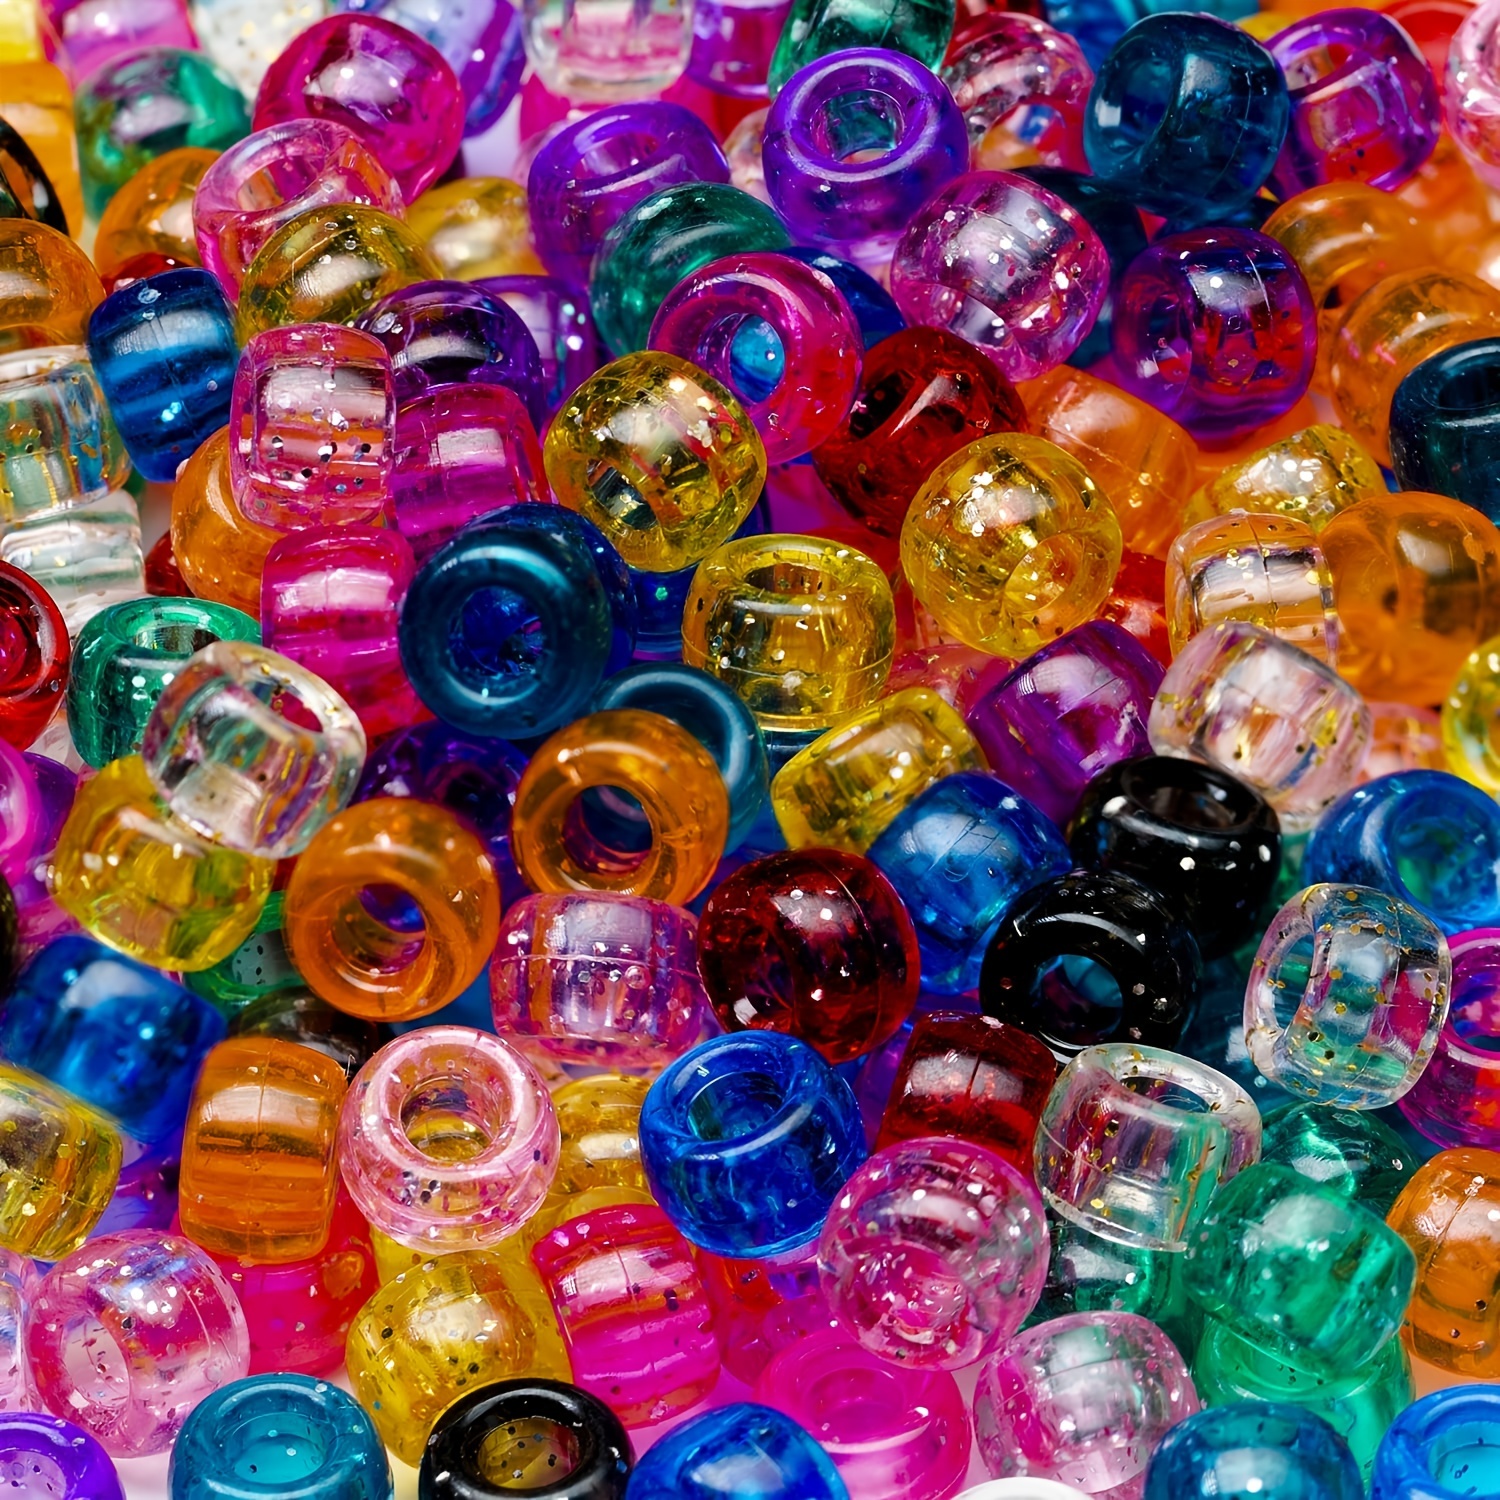 Rainbow Glitter Multicolor Mix Plastic Pony Beads 6 x 9mm, 500 beads